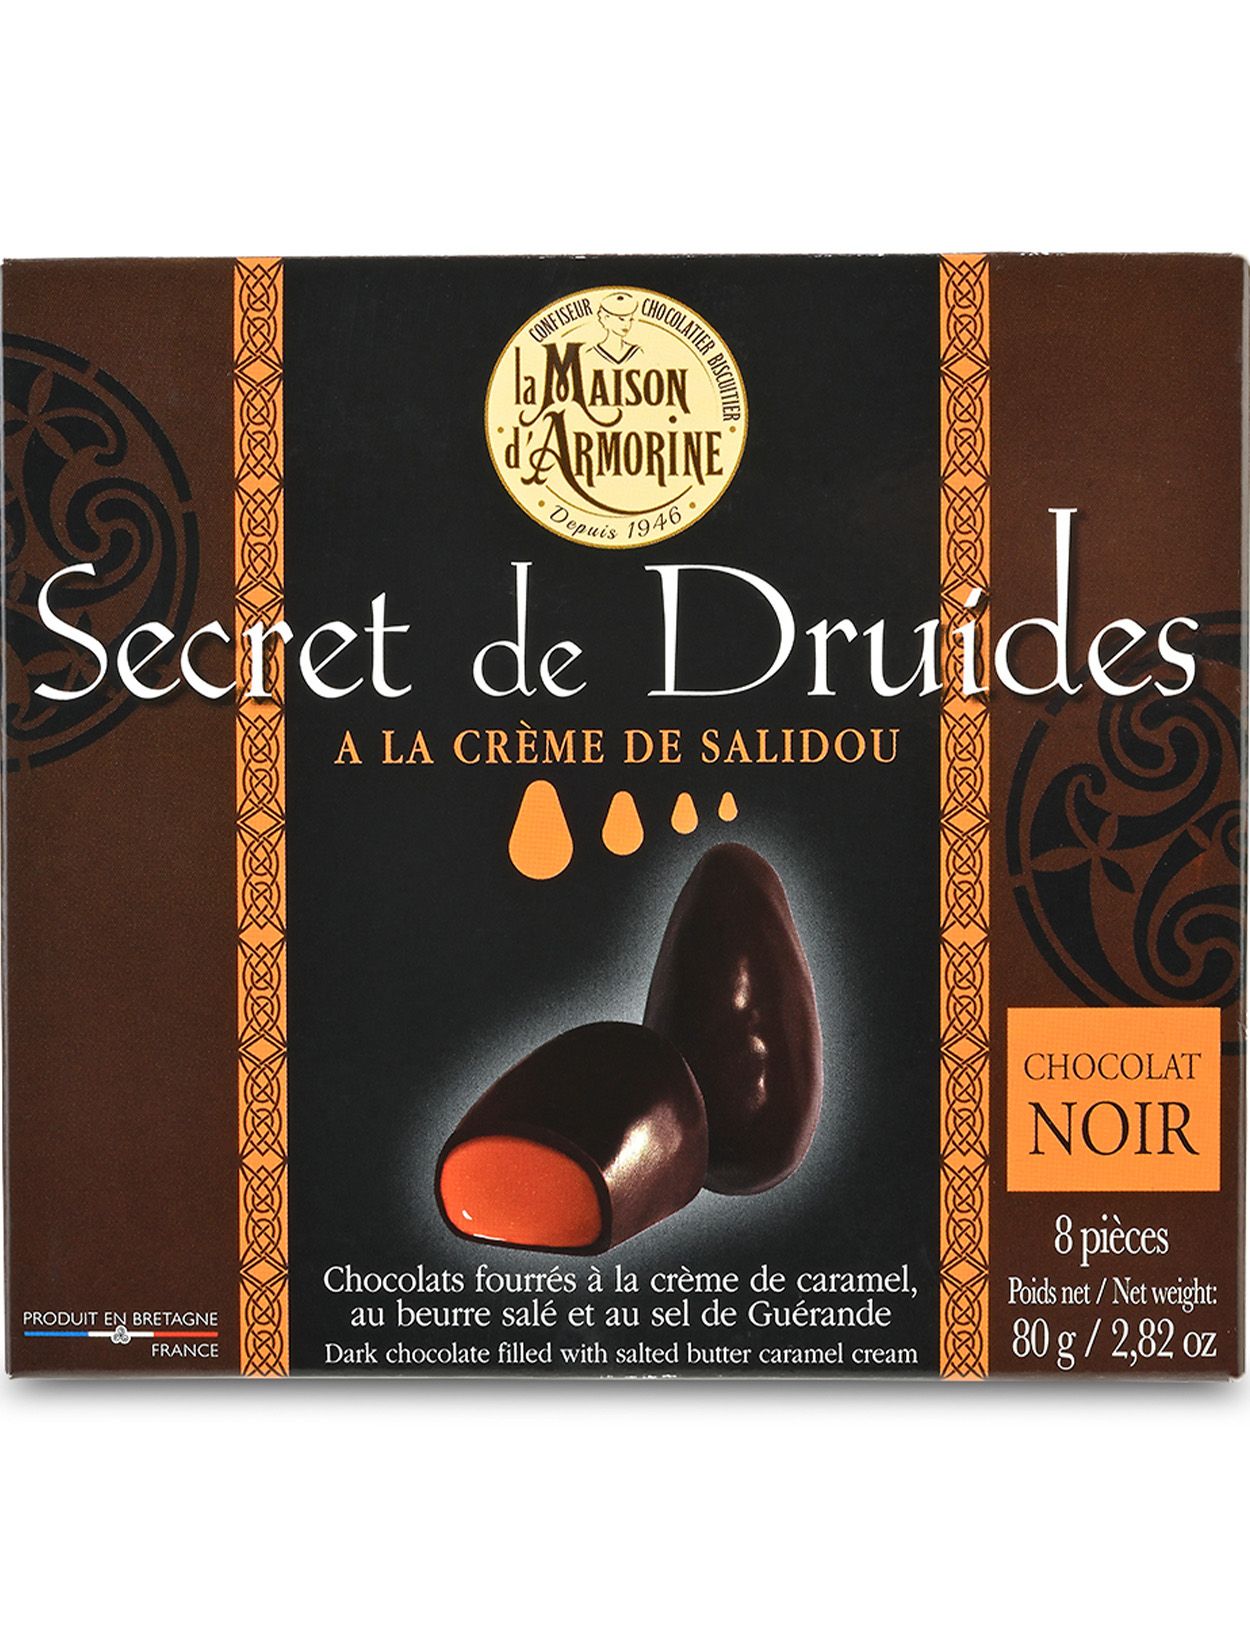 Secret de Druides - Dark Chocolates with Salted Caramel Cream